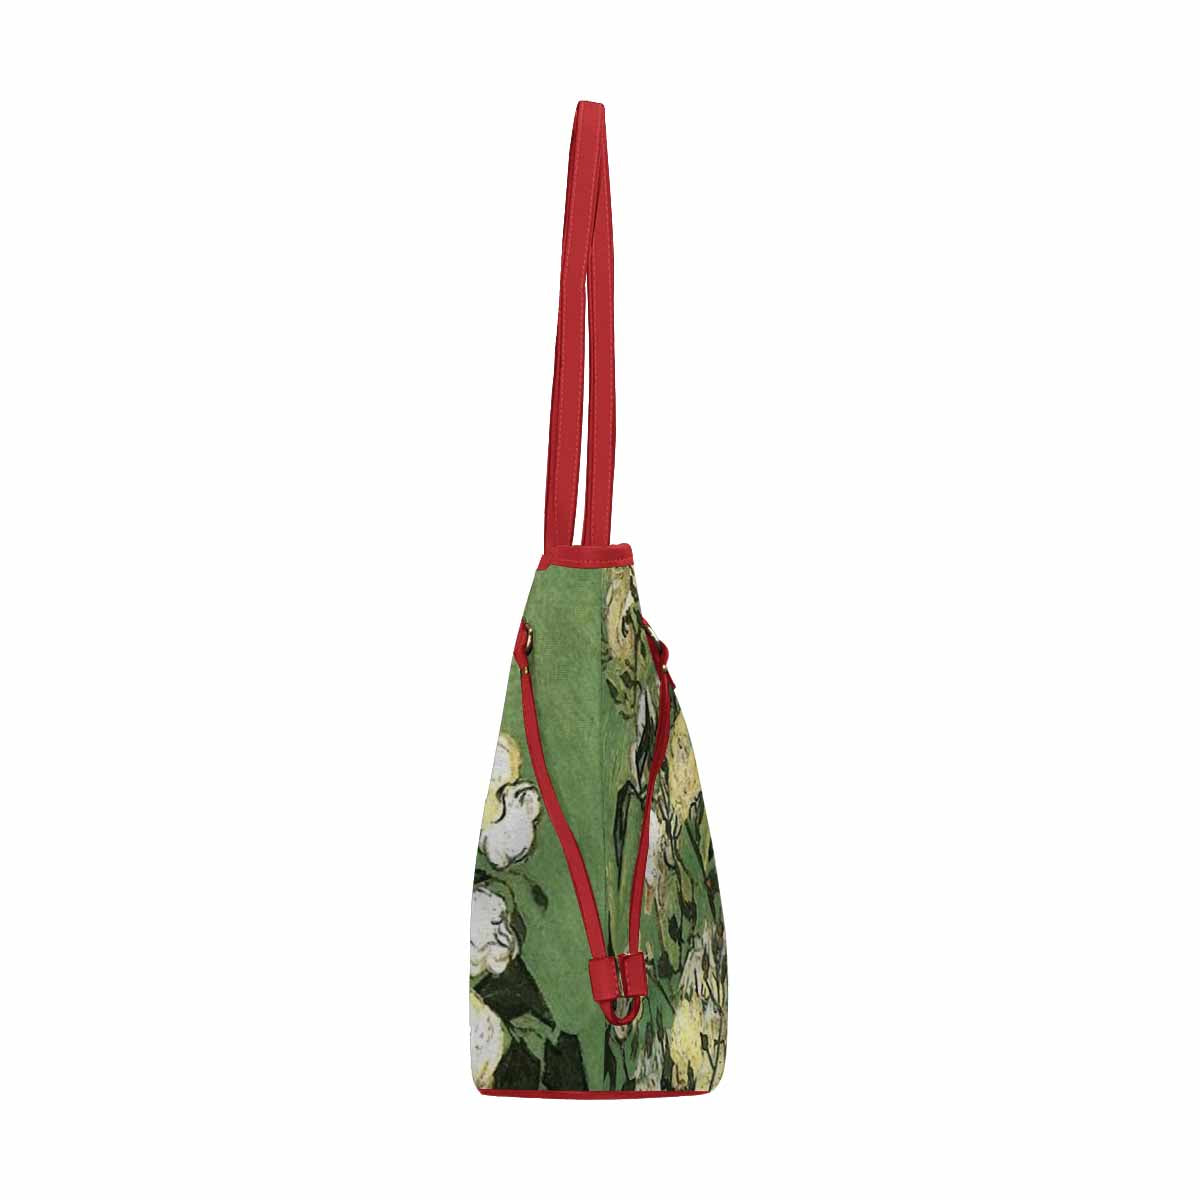 Vintage Floral Handbag, Classic Handbag, Mod 1695361 Design 55 RED TRIM